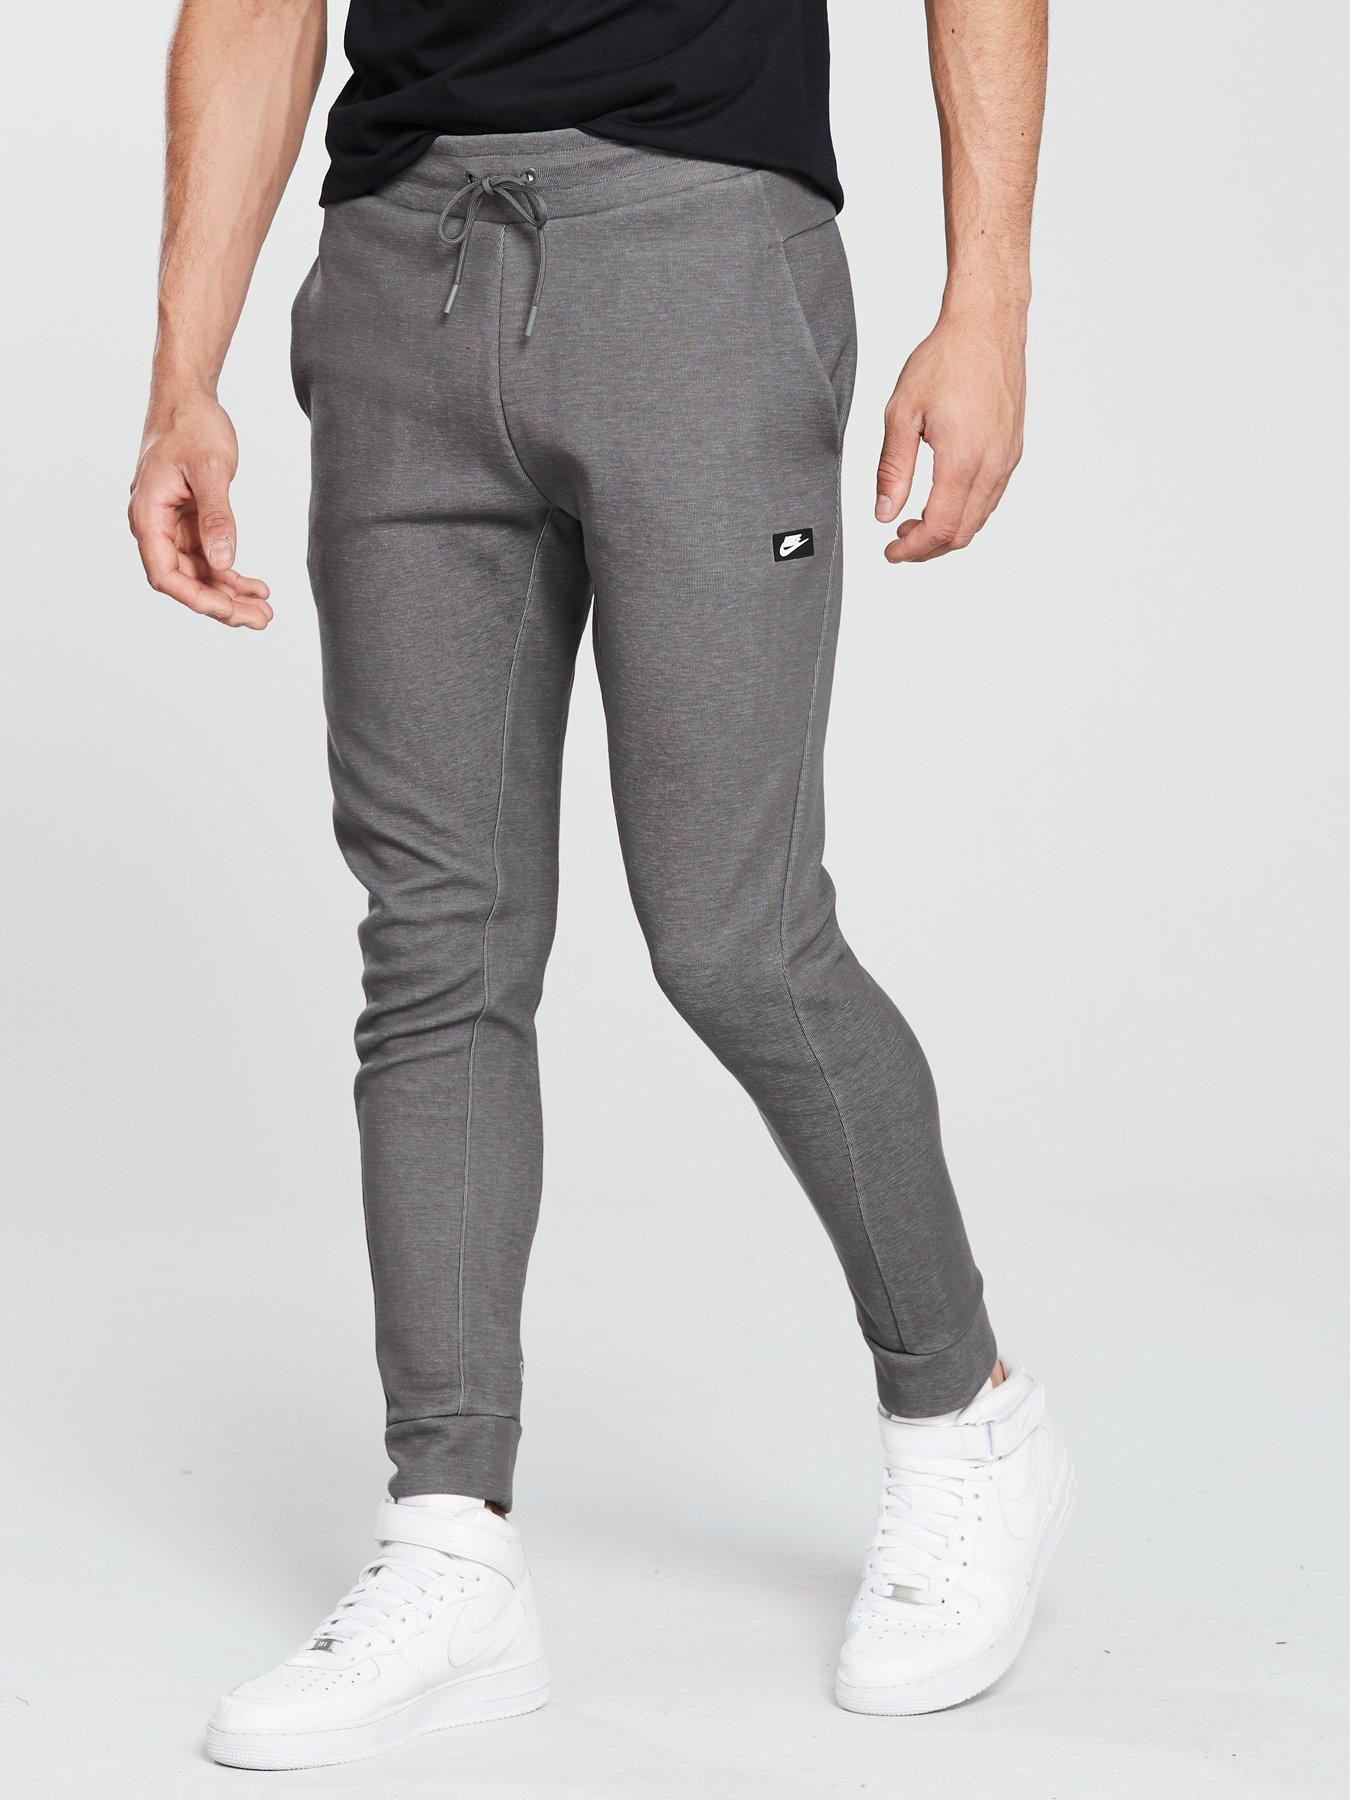 dark grey nike track pants